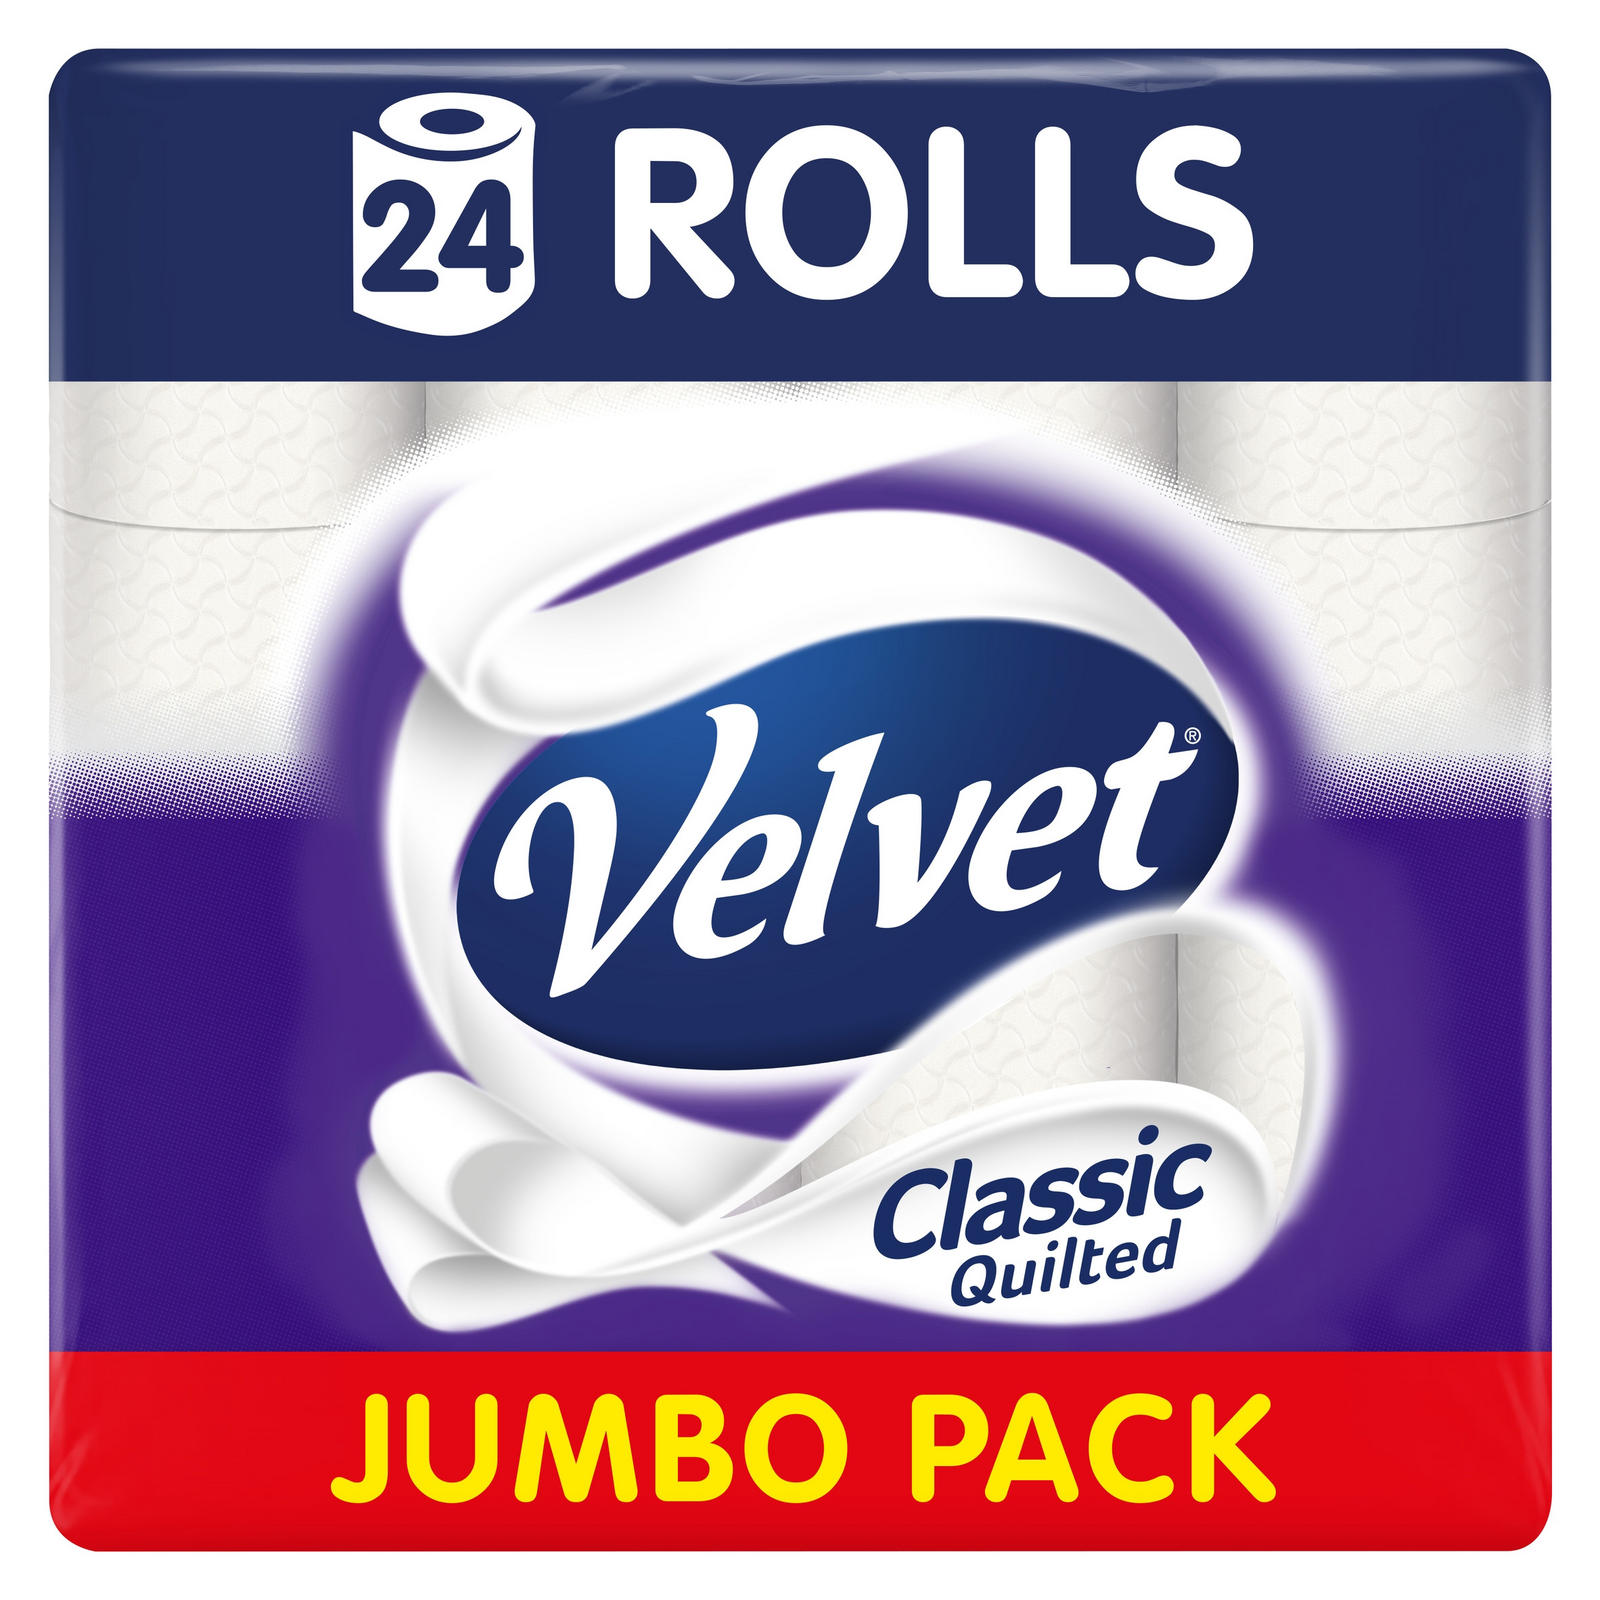 Velvet Classic Quilted Toilet Tissue 24 rolls